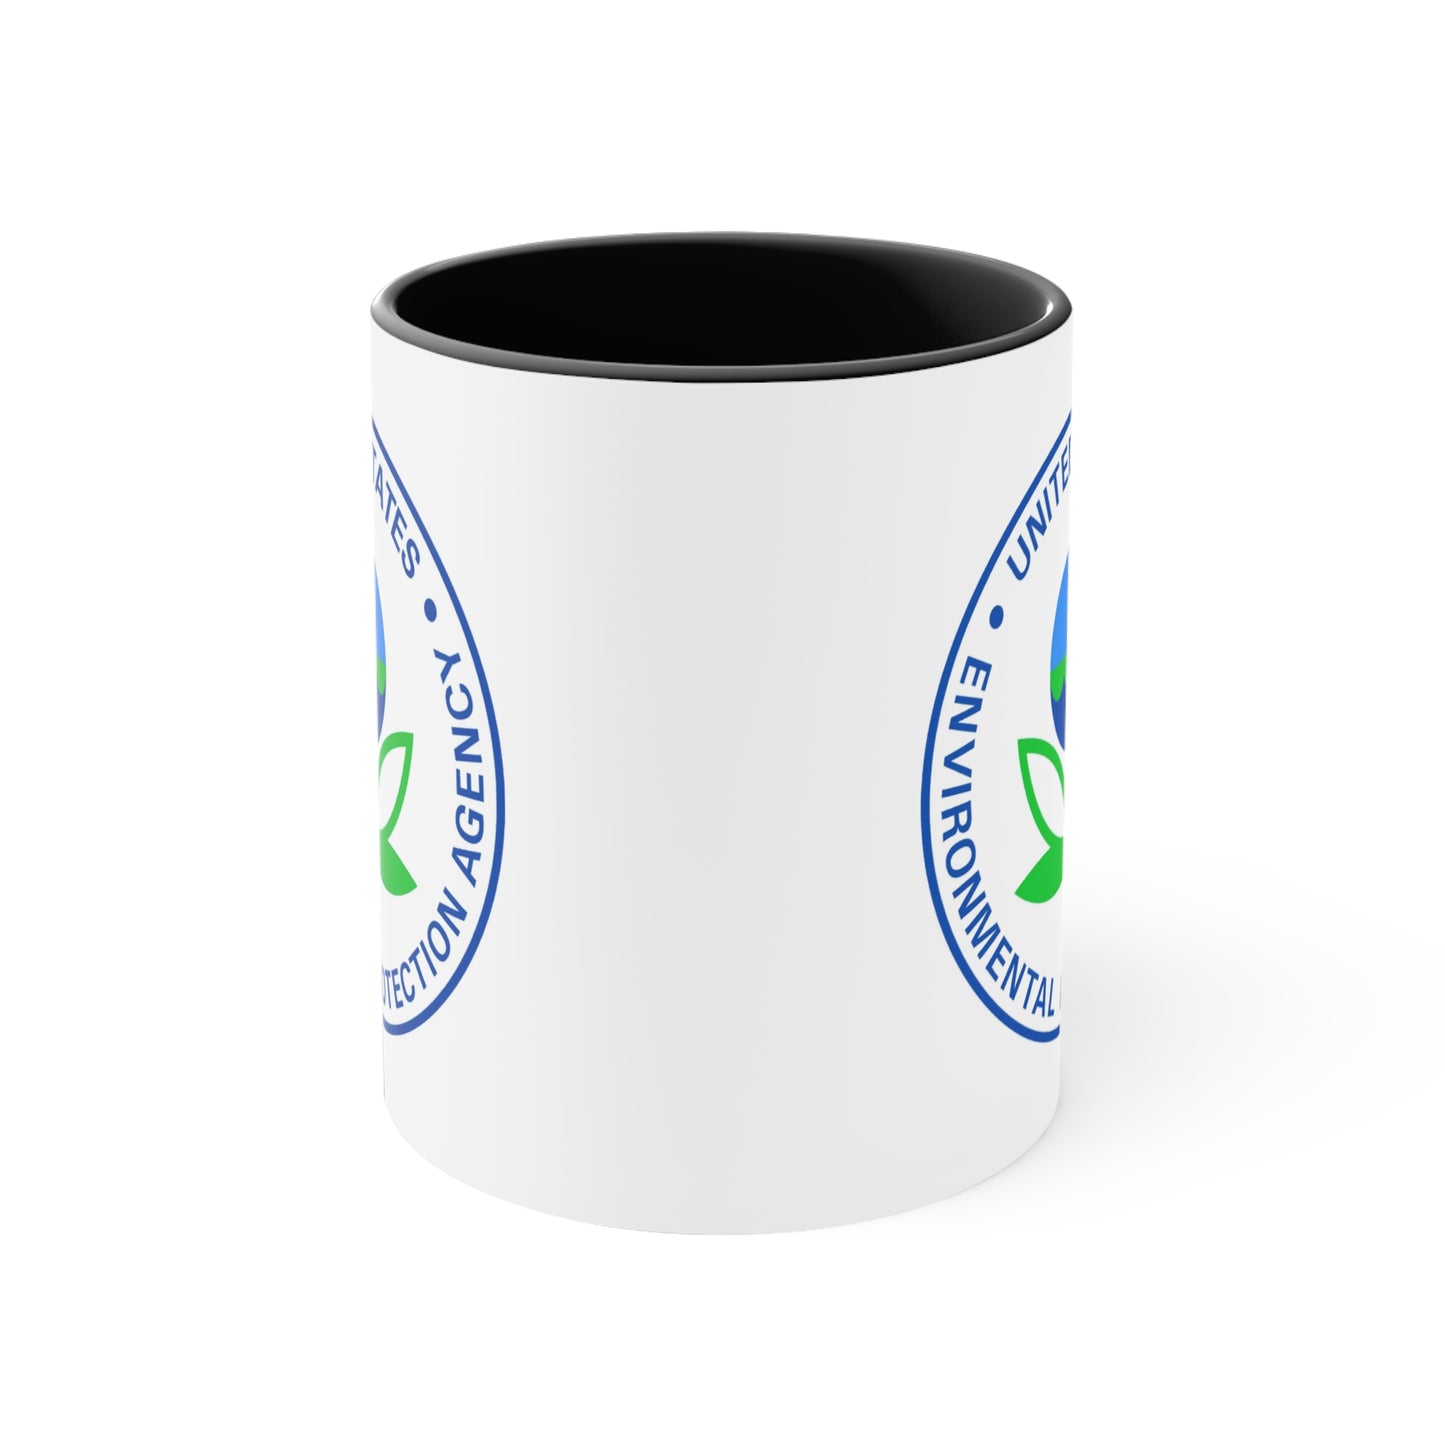 US EPA Coffee Mug - Double Sided Black Accent White Ceramic 11oz by TheGlassyLass.com